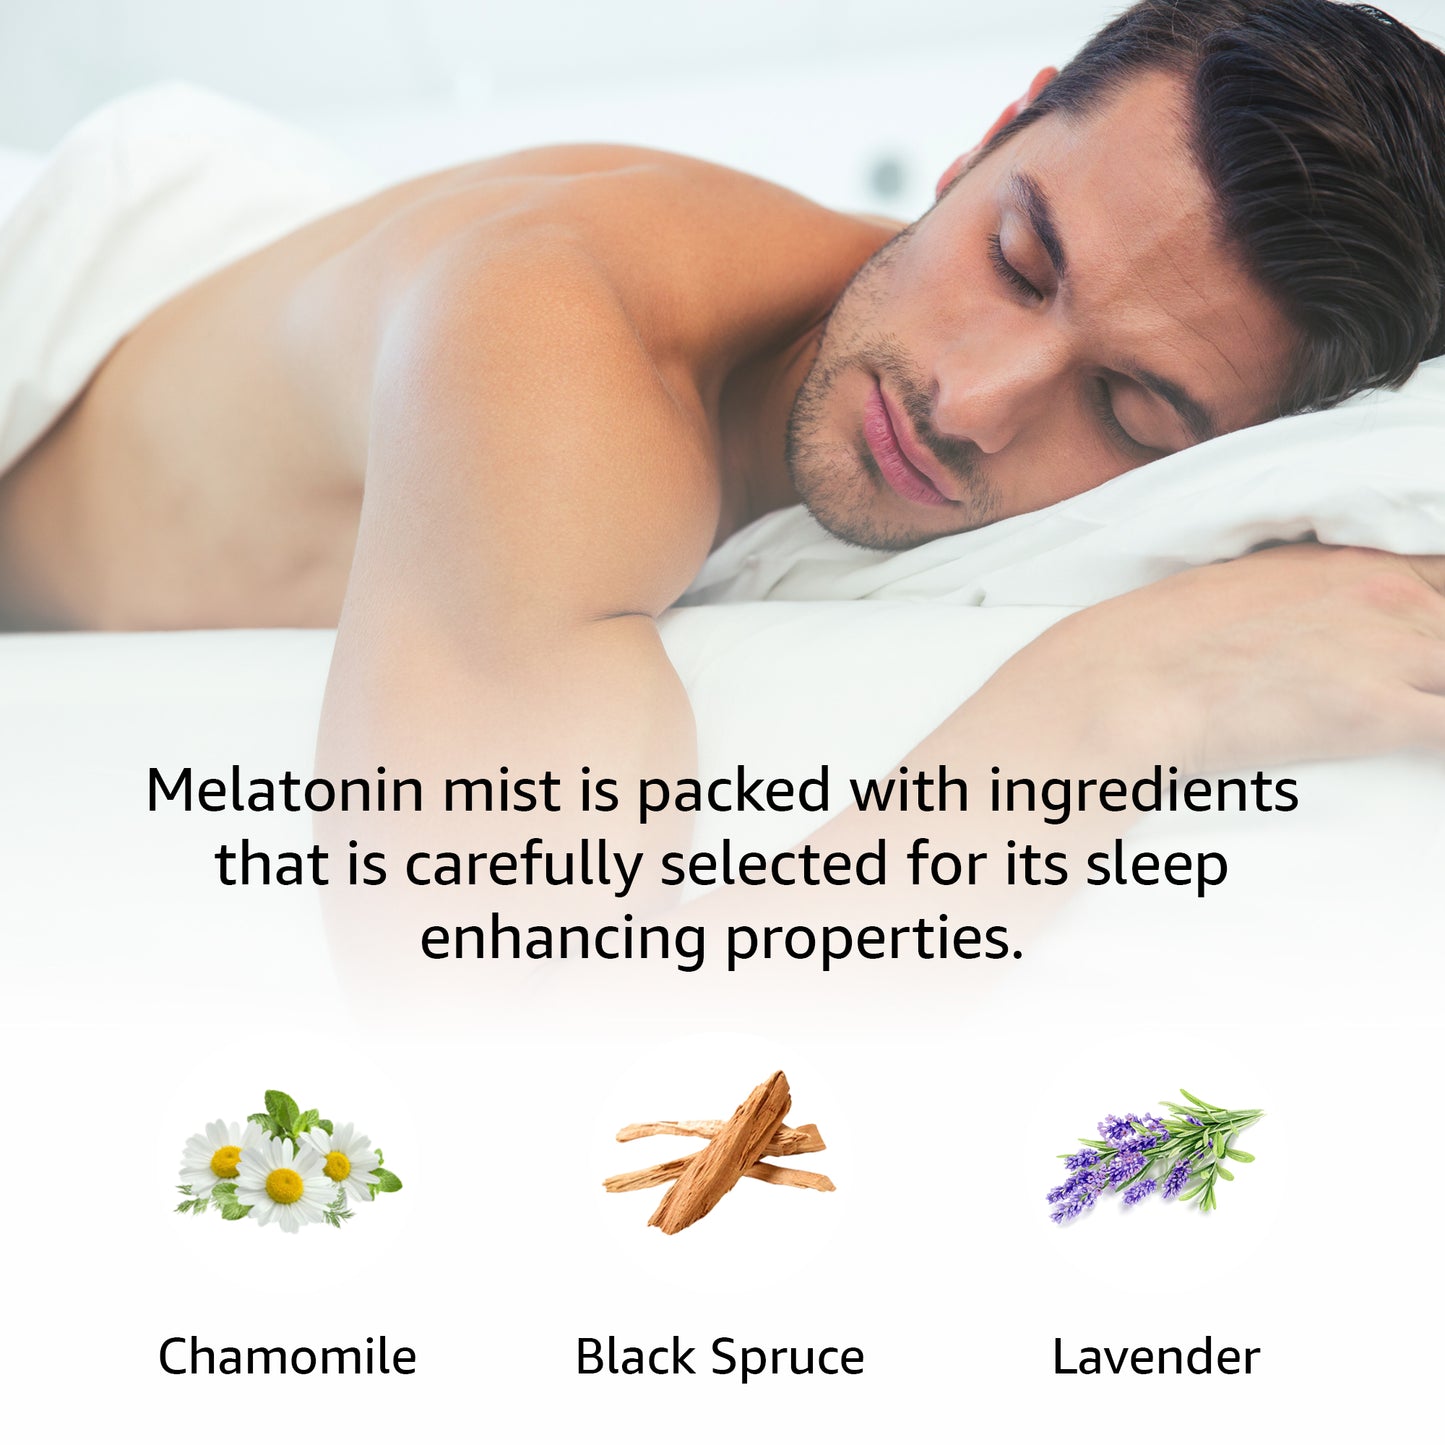 Deep Sleep Melatonin Pillow Spray